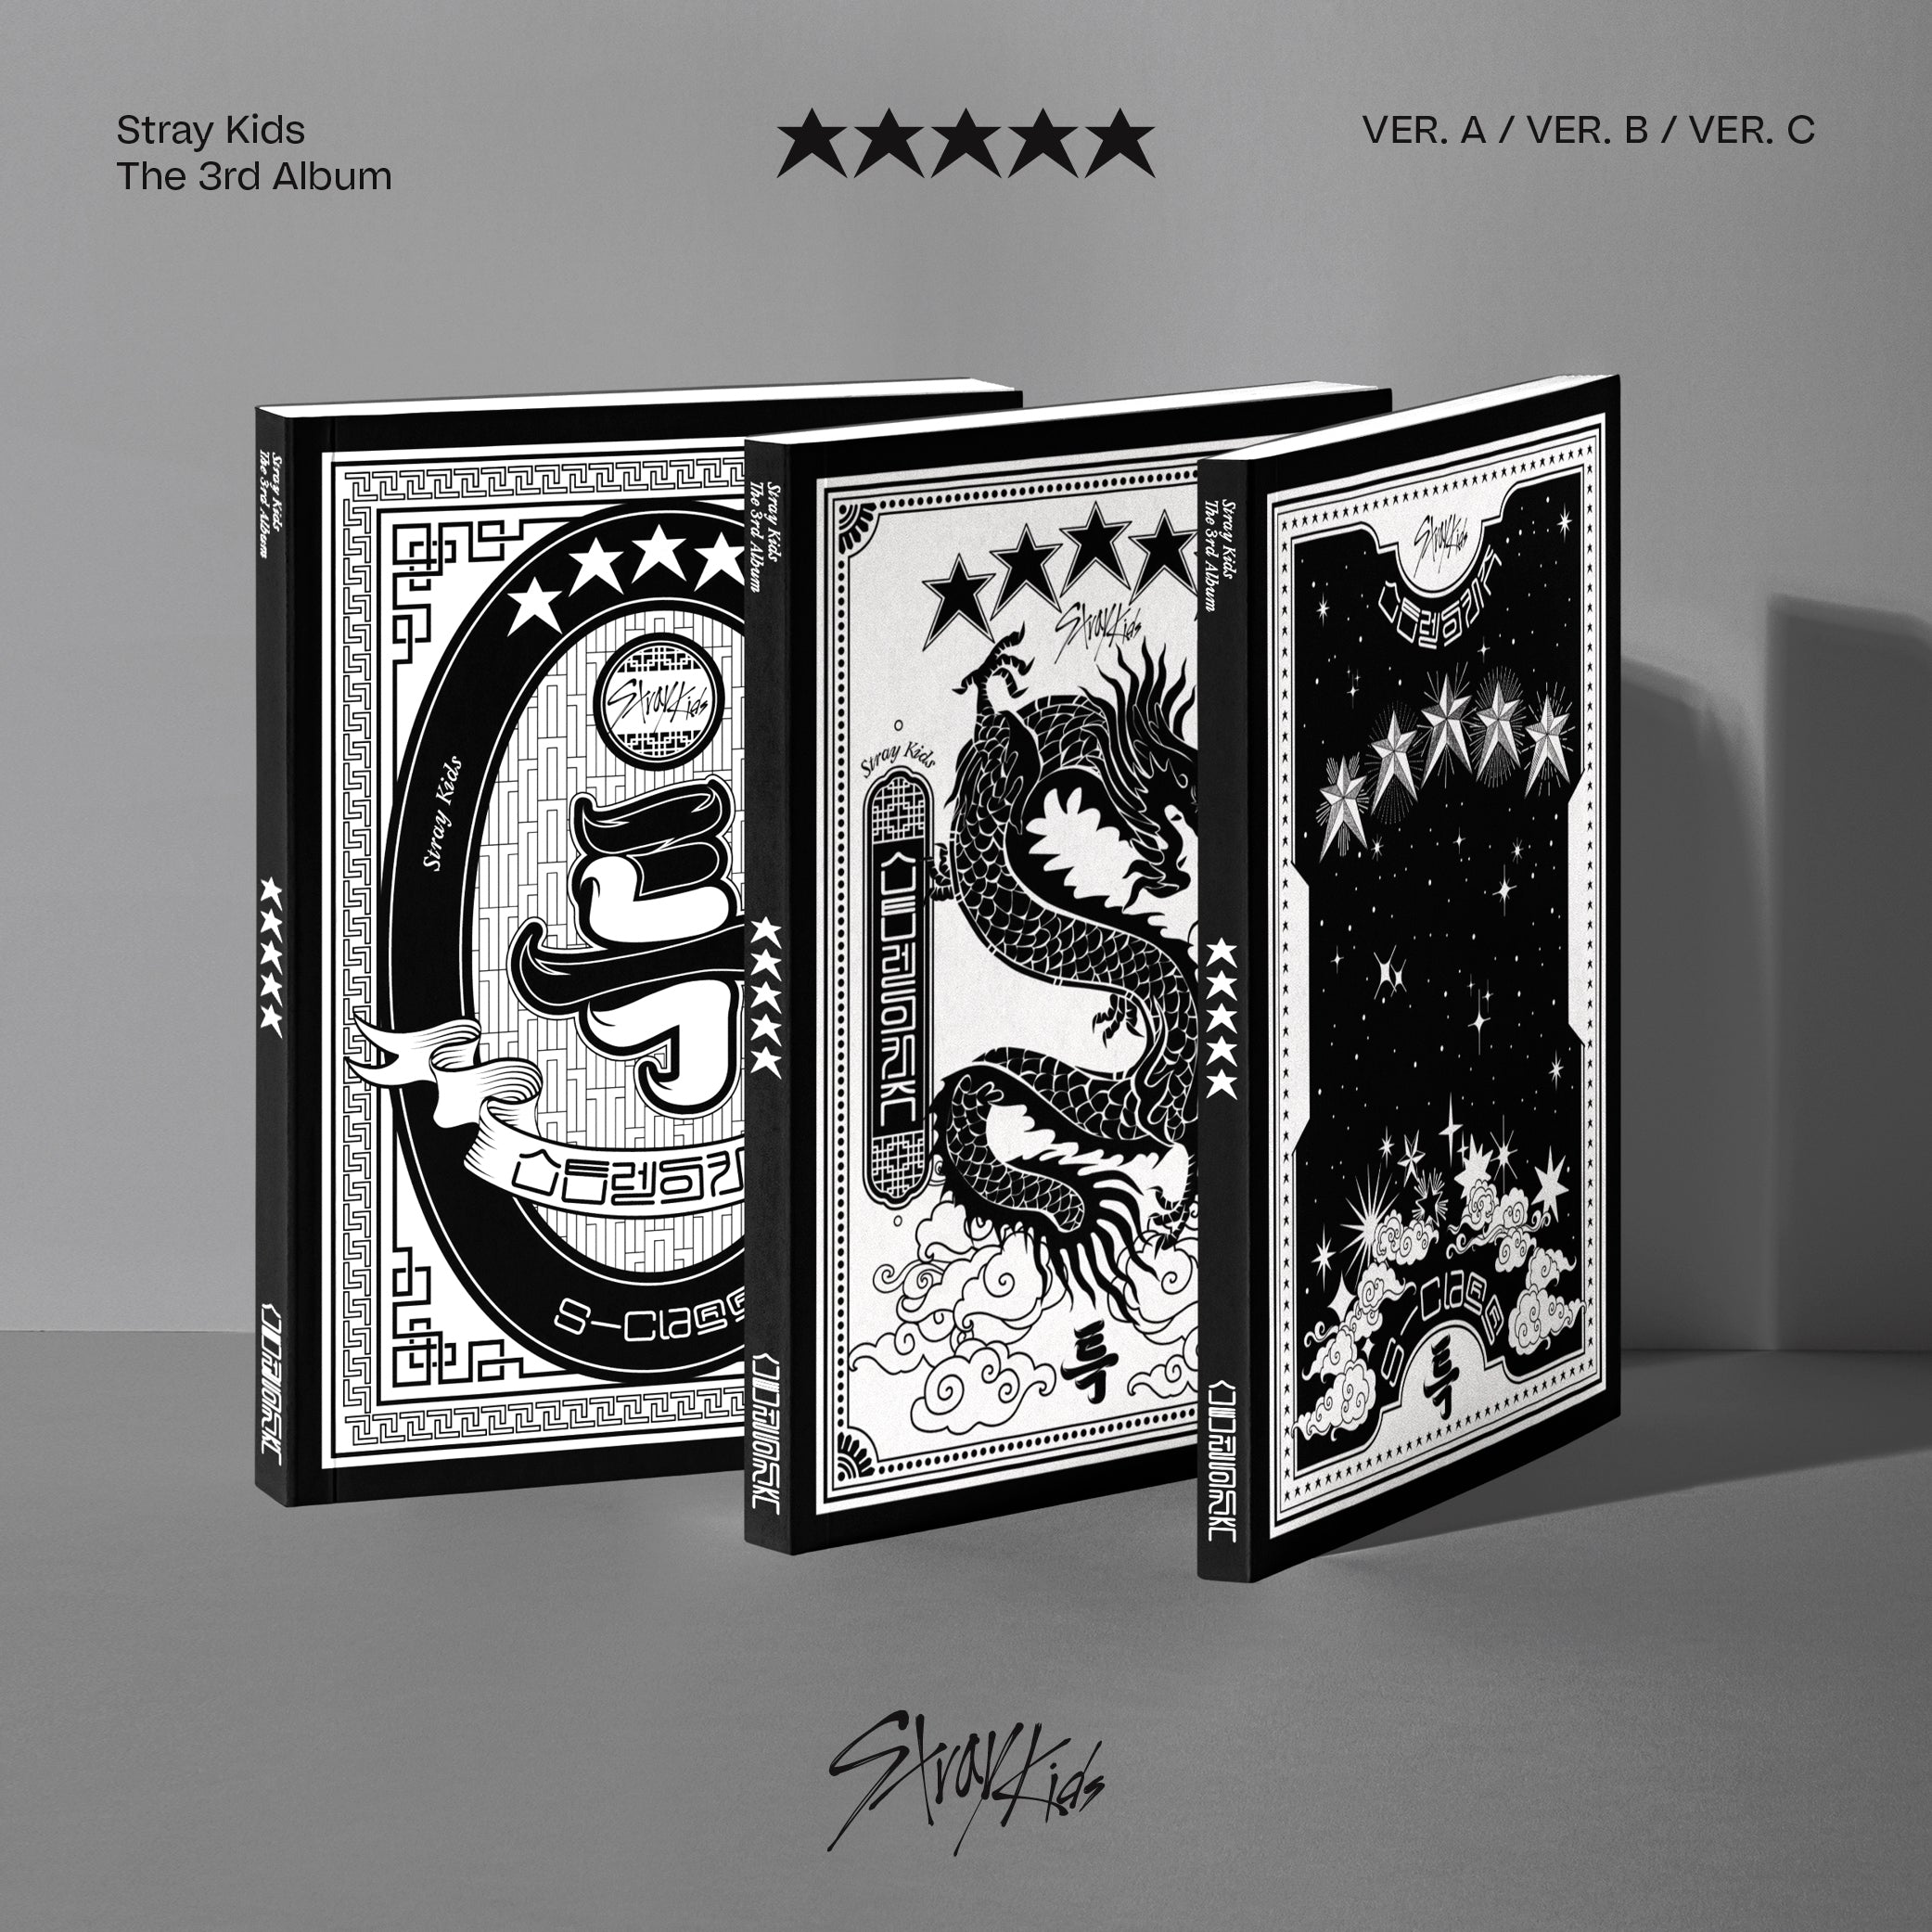 Stray Kids - The 3rd Album ★★★★★ 5-STAR